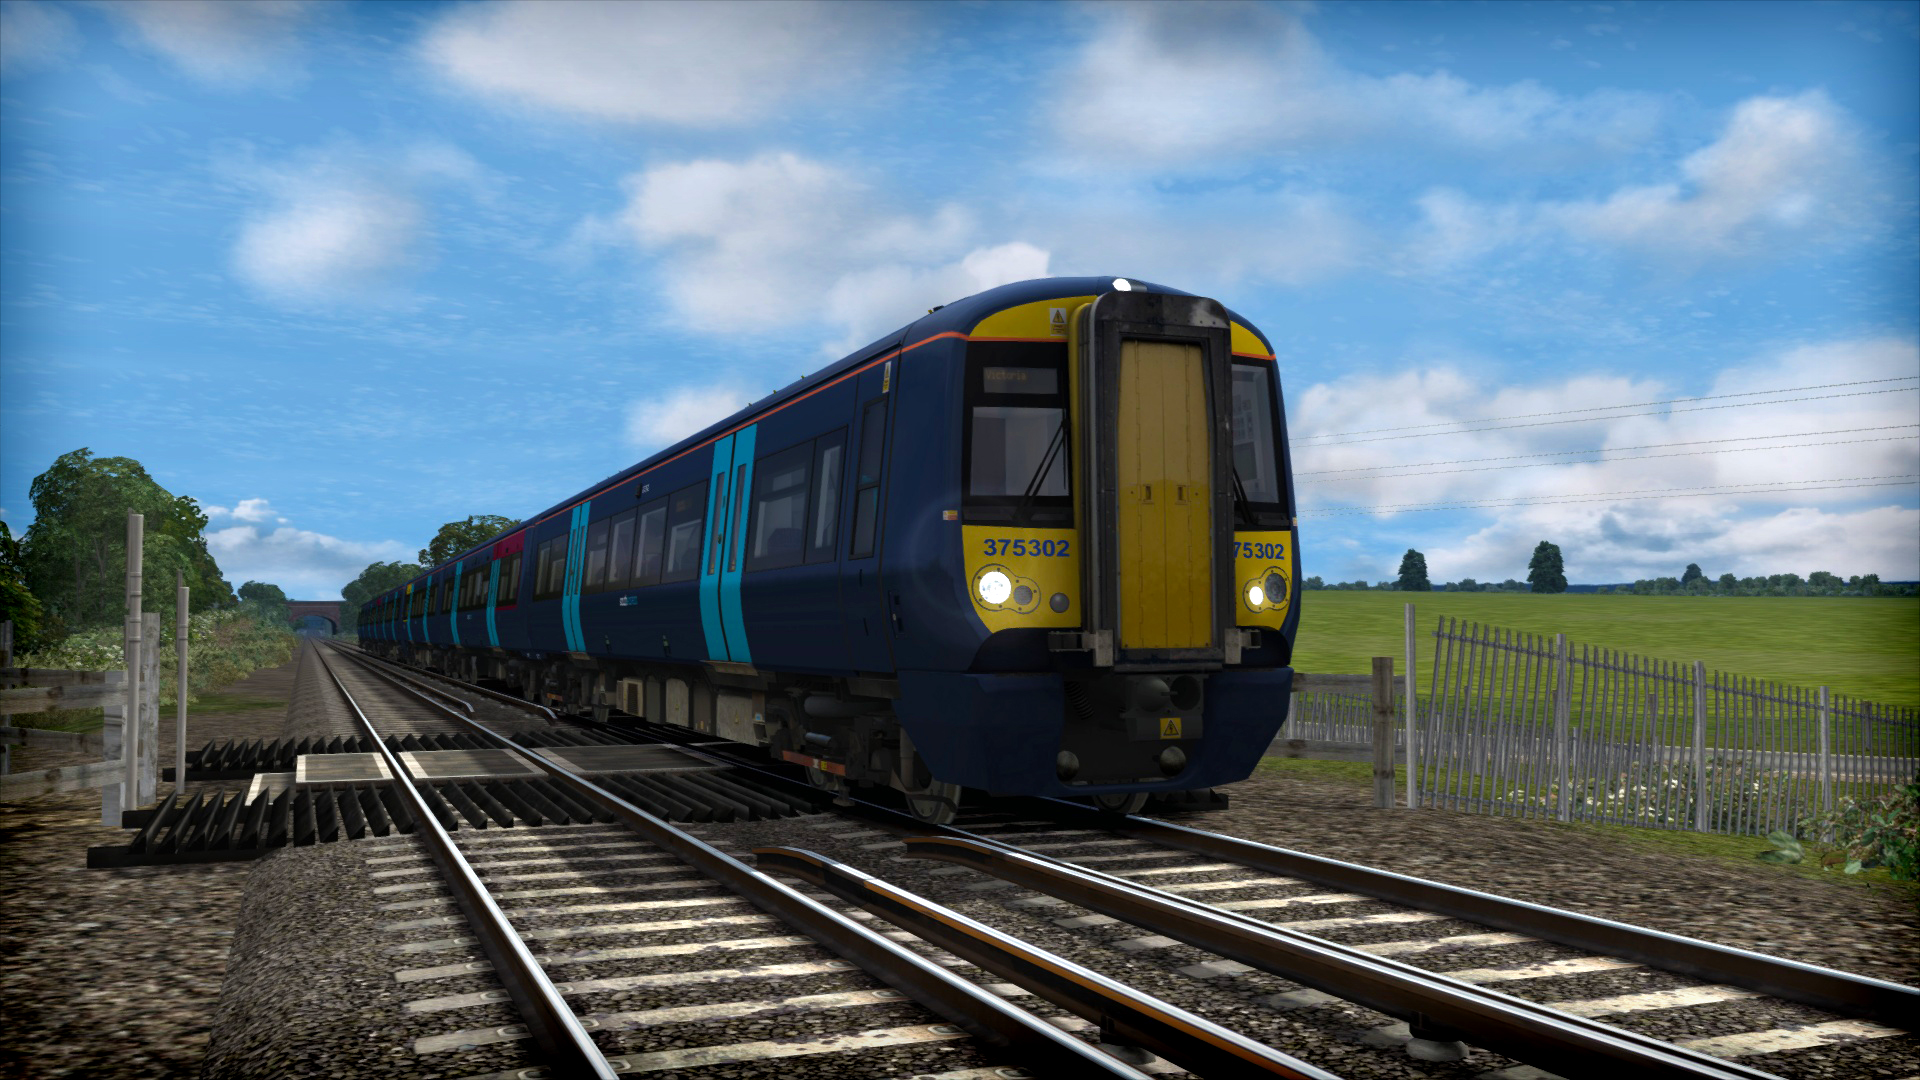 Train Simulator - Chatham Main Line - London-Gillingham Route Add-On Steam CD Key